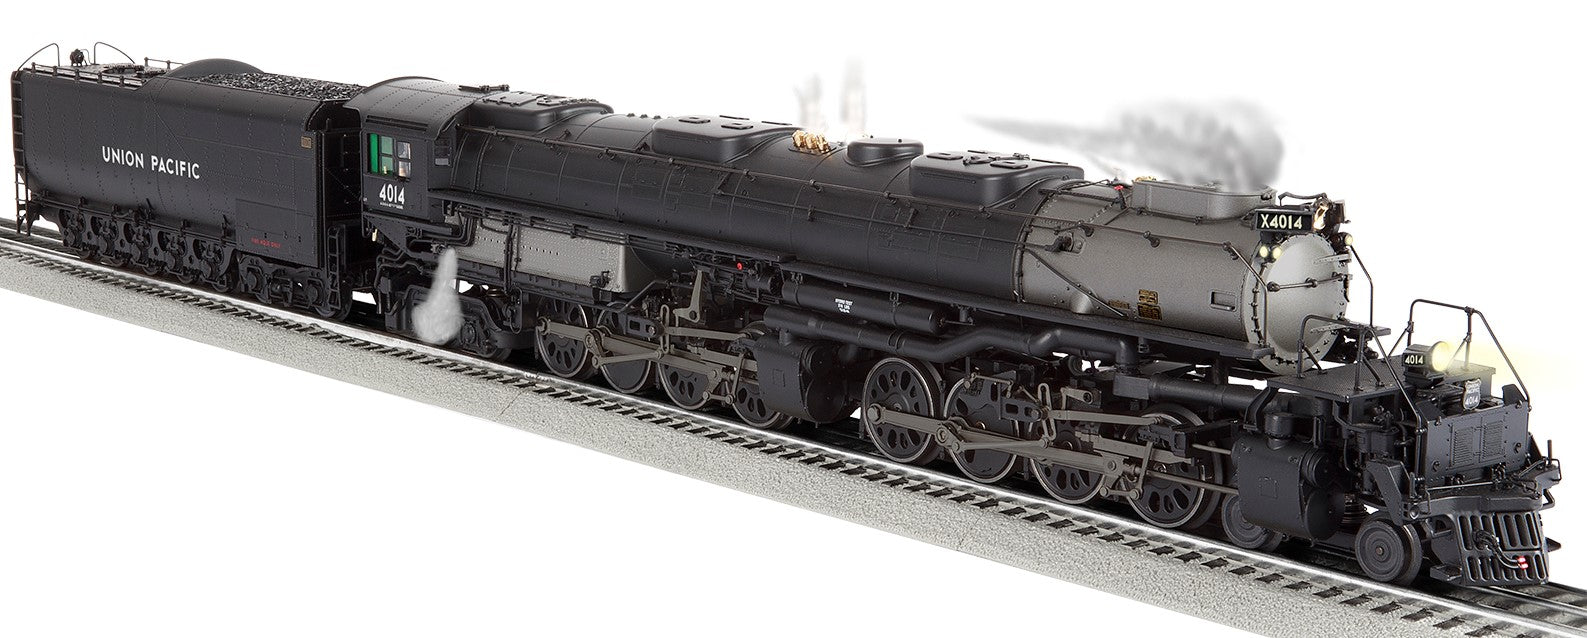 Lionel 2331264 - Vision Line Big Boy Steam Locomotive "Union Pacific" #4014